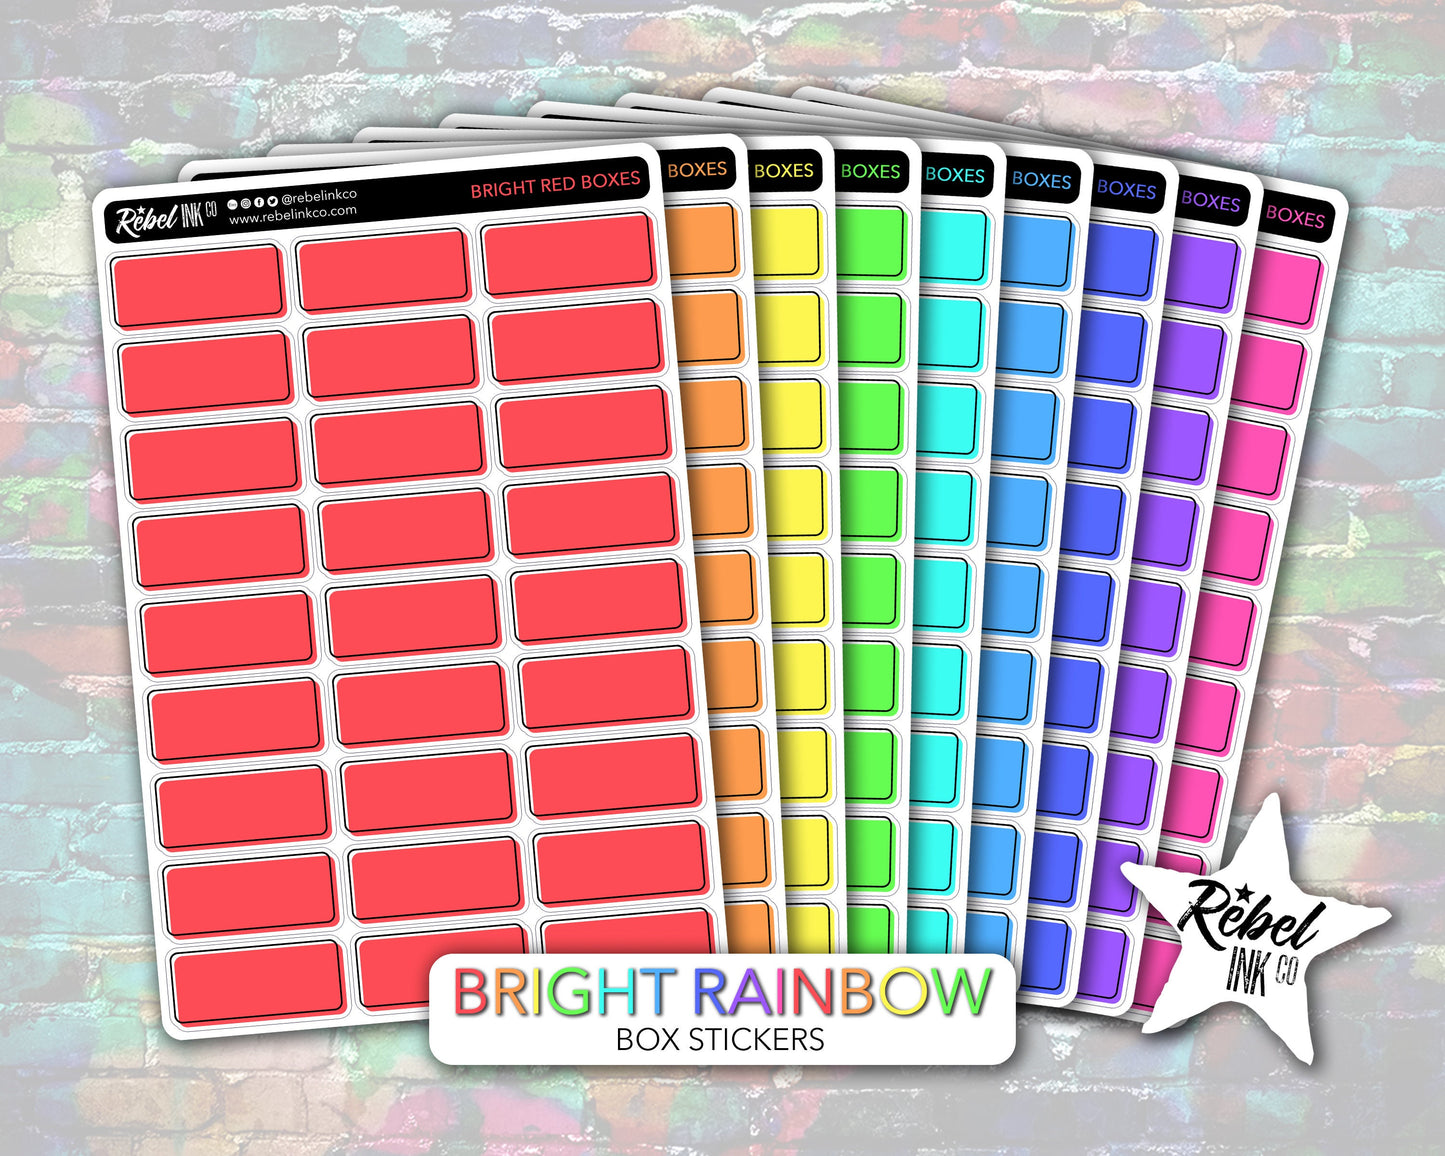 Standard Boxes Bright Rainbow